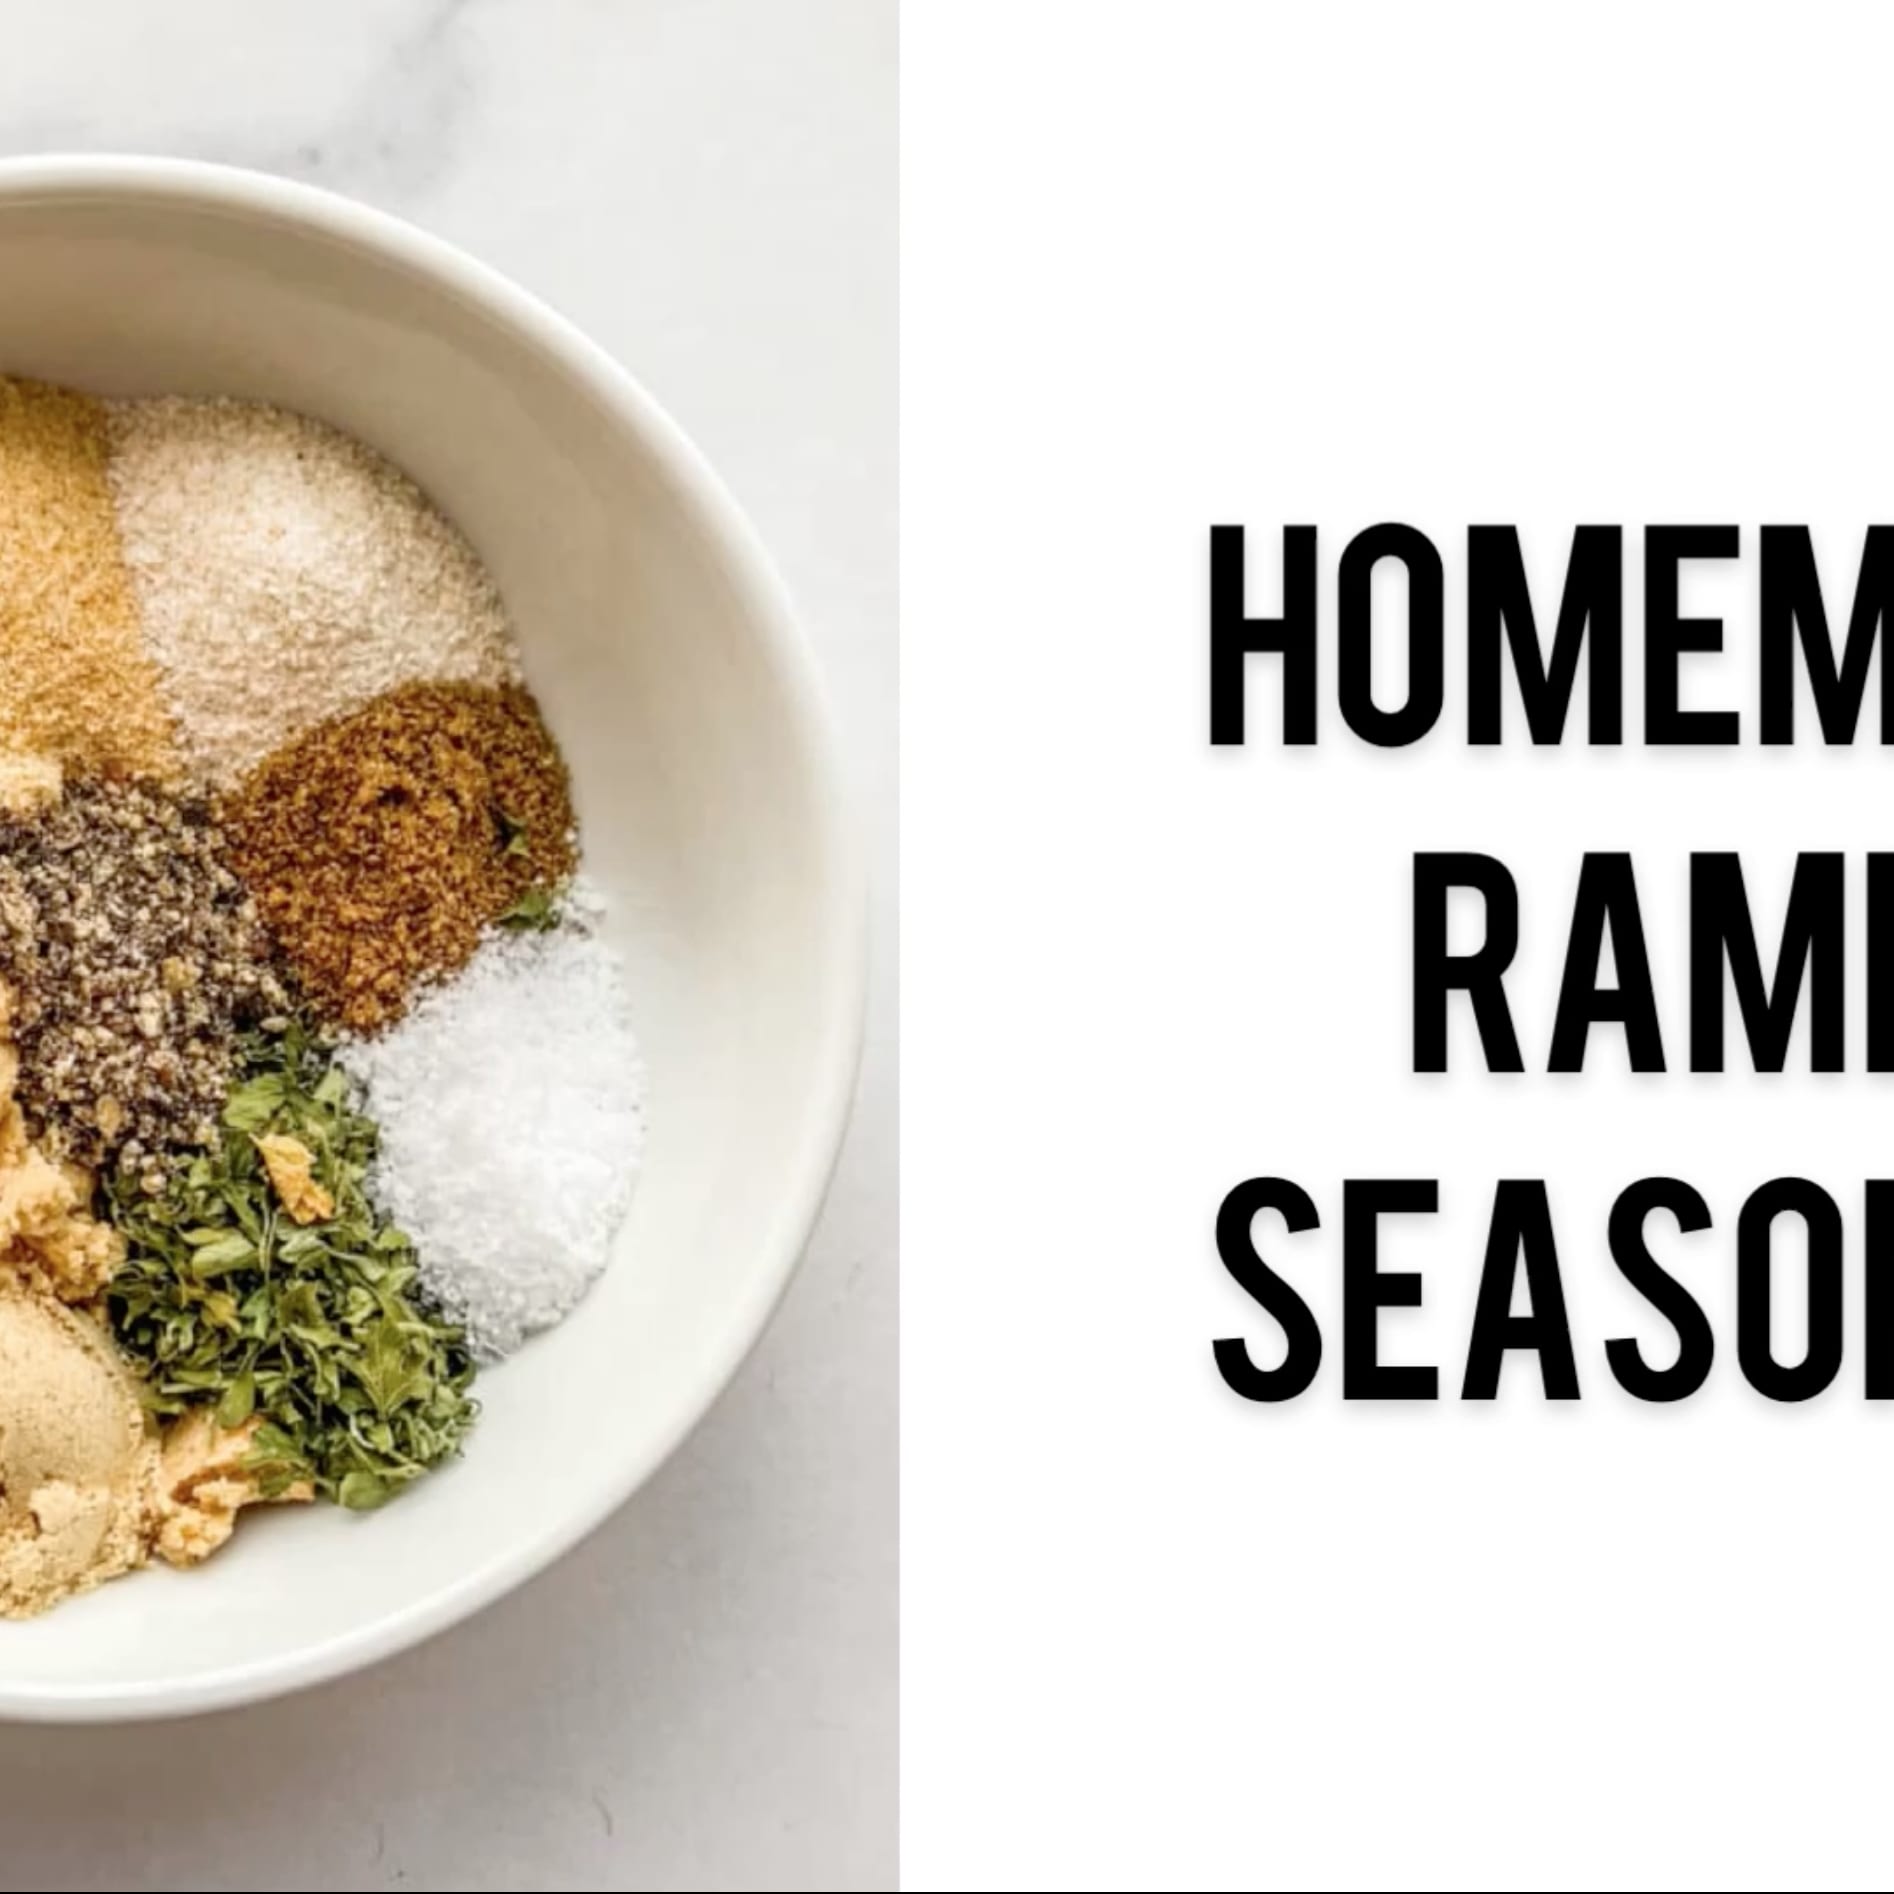 Ramen Seasoning (4 Pack)